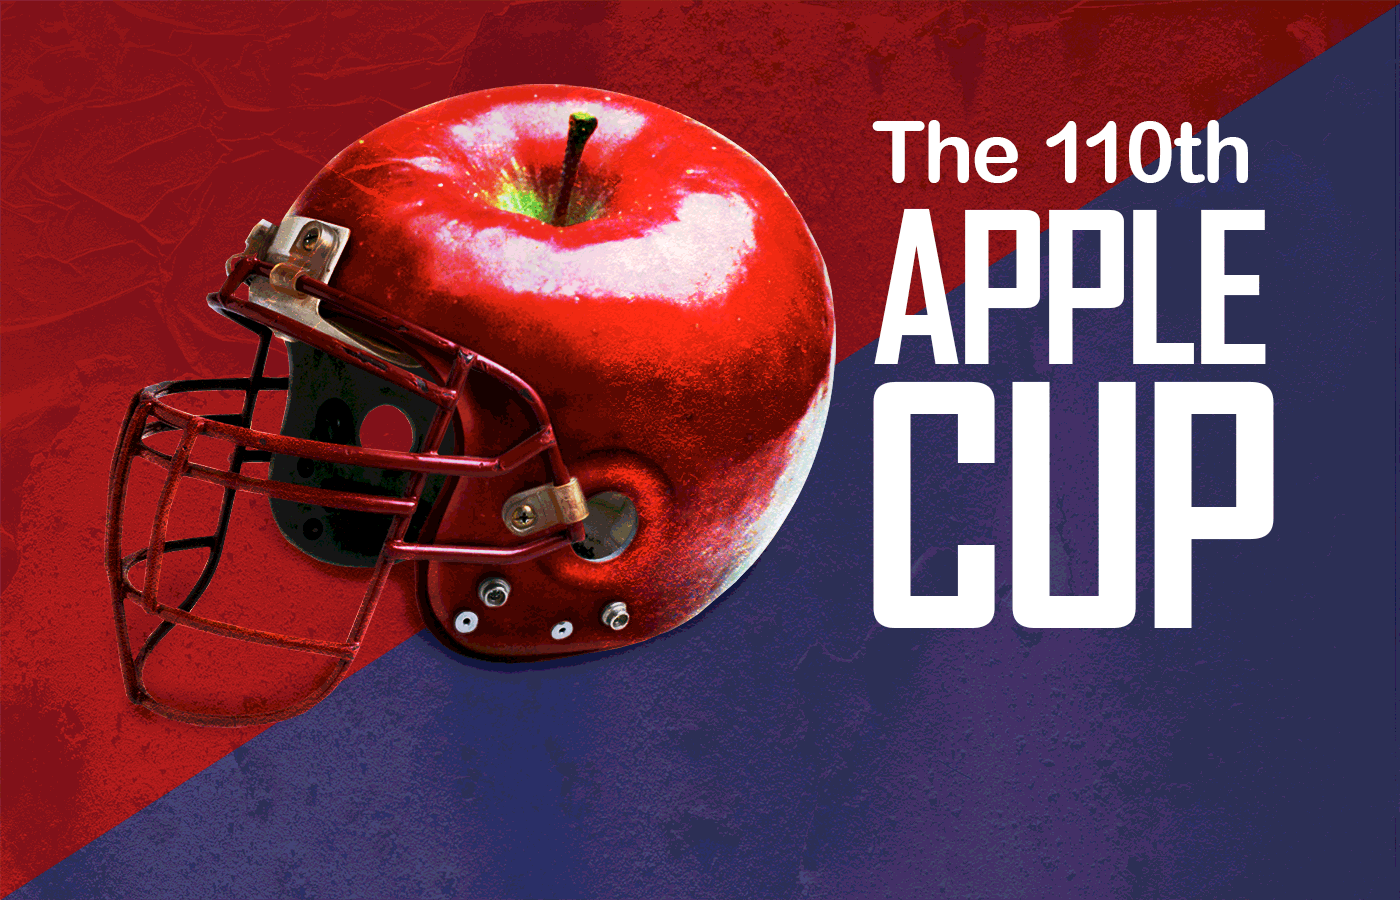 Apple cups. Apple Cup. Kick off.